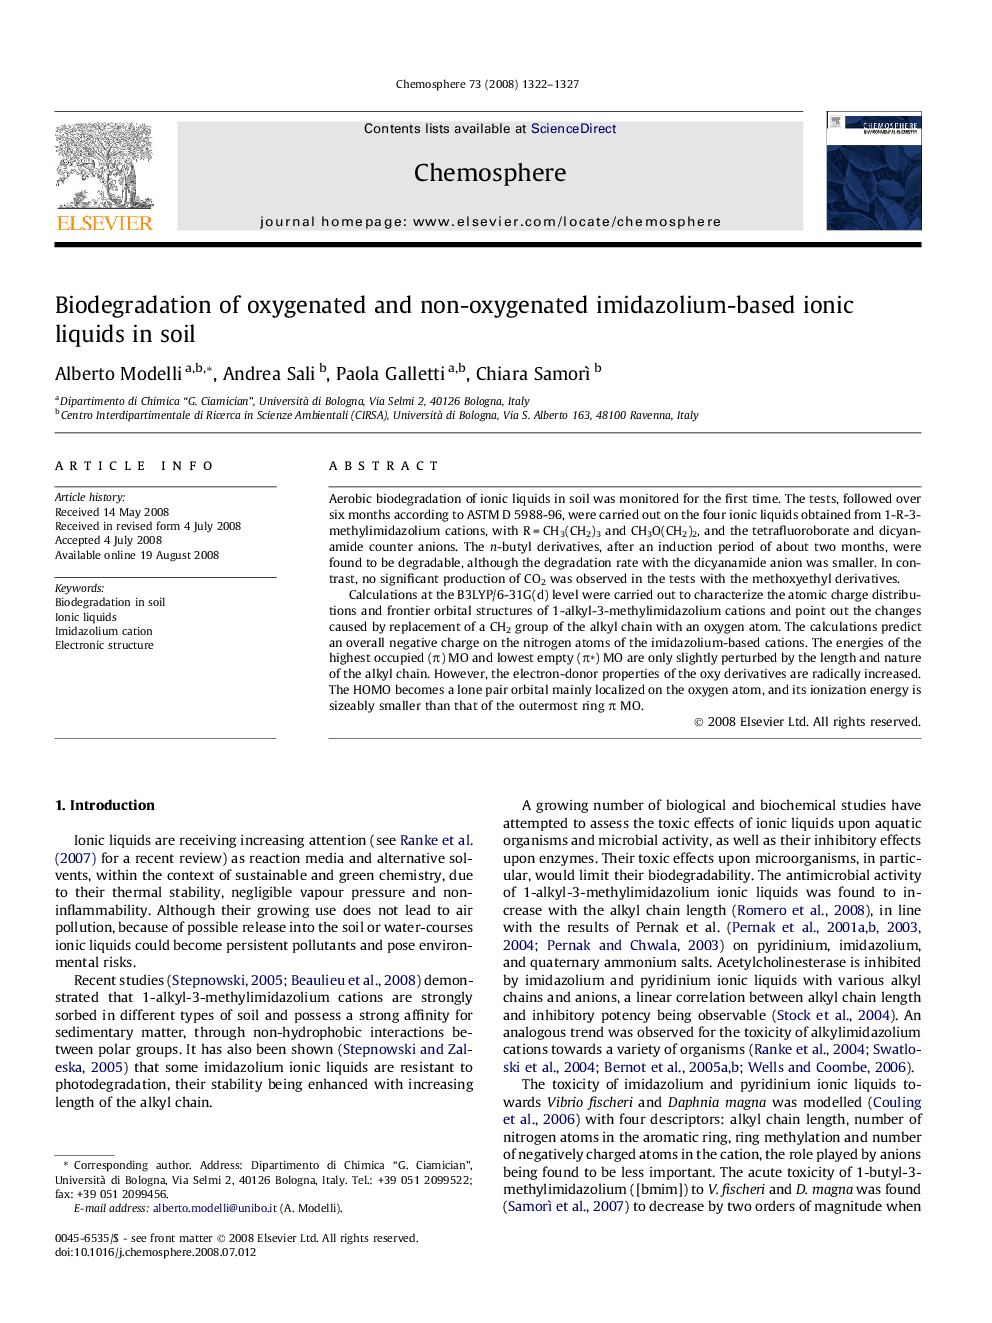 Biodegradation of oxygenated and non-oxygenated imidazolium-based ionic liquids in soil